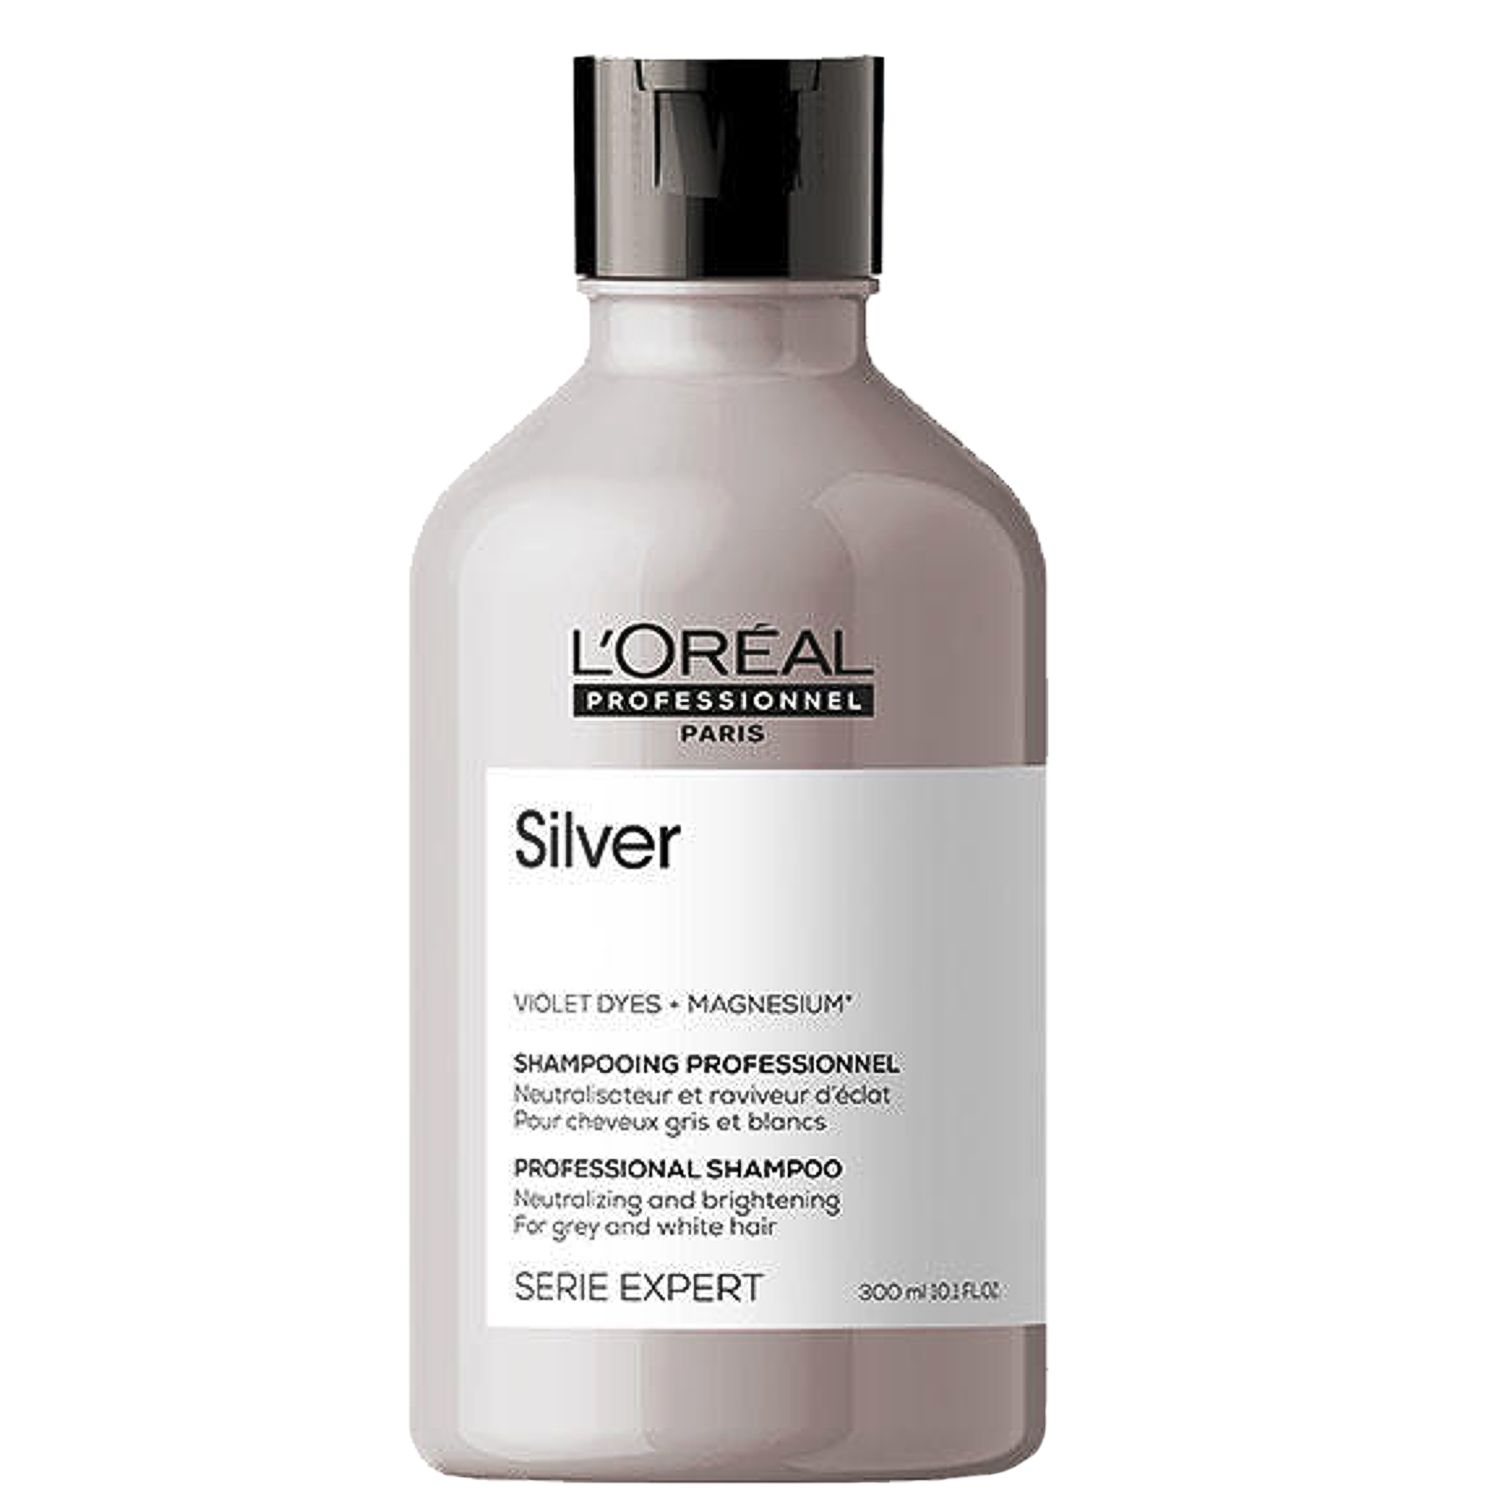 L'ORÉAL Expert SILVER Professional Shampoo 300 ml